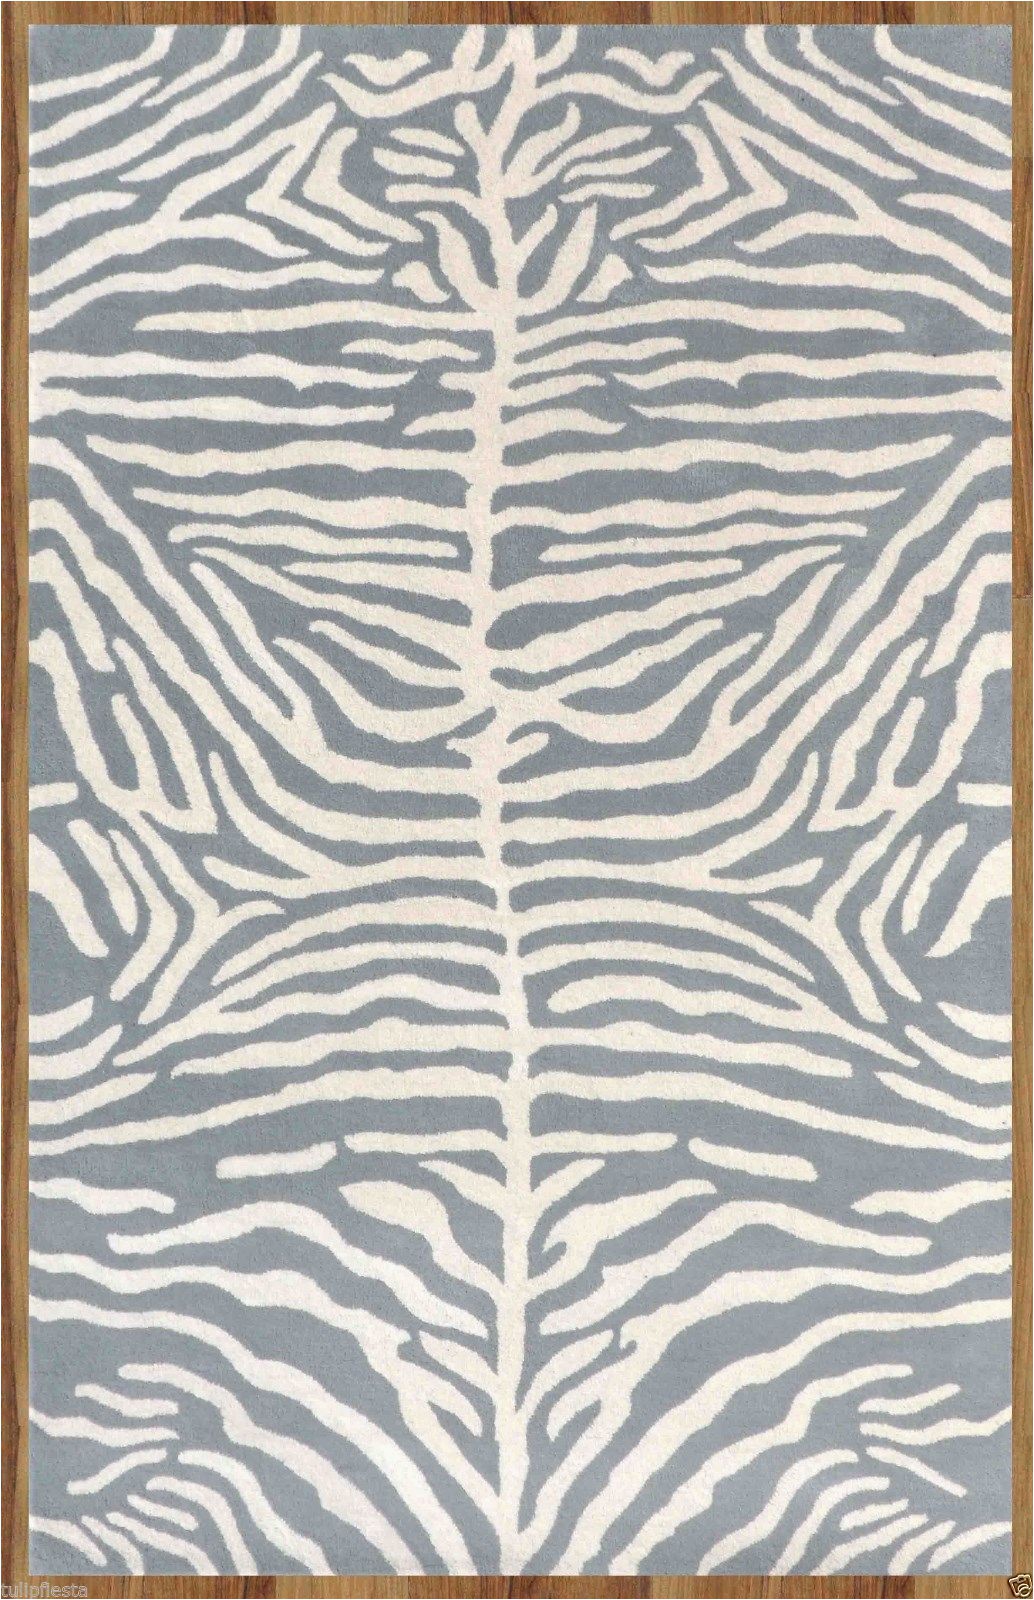 Blue Zebra Print Rug Blue Zebra Wool 2000 now 5 X 8 and and 50 Similar Items